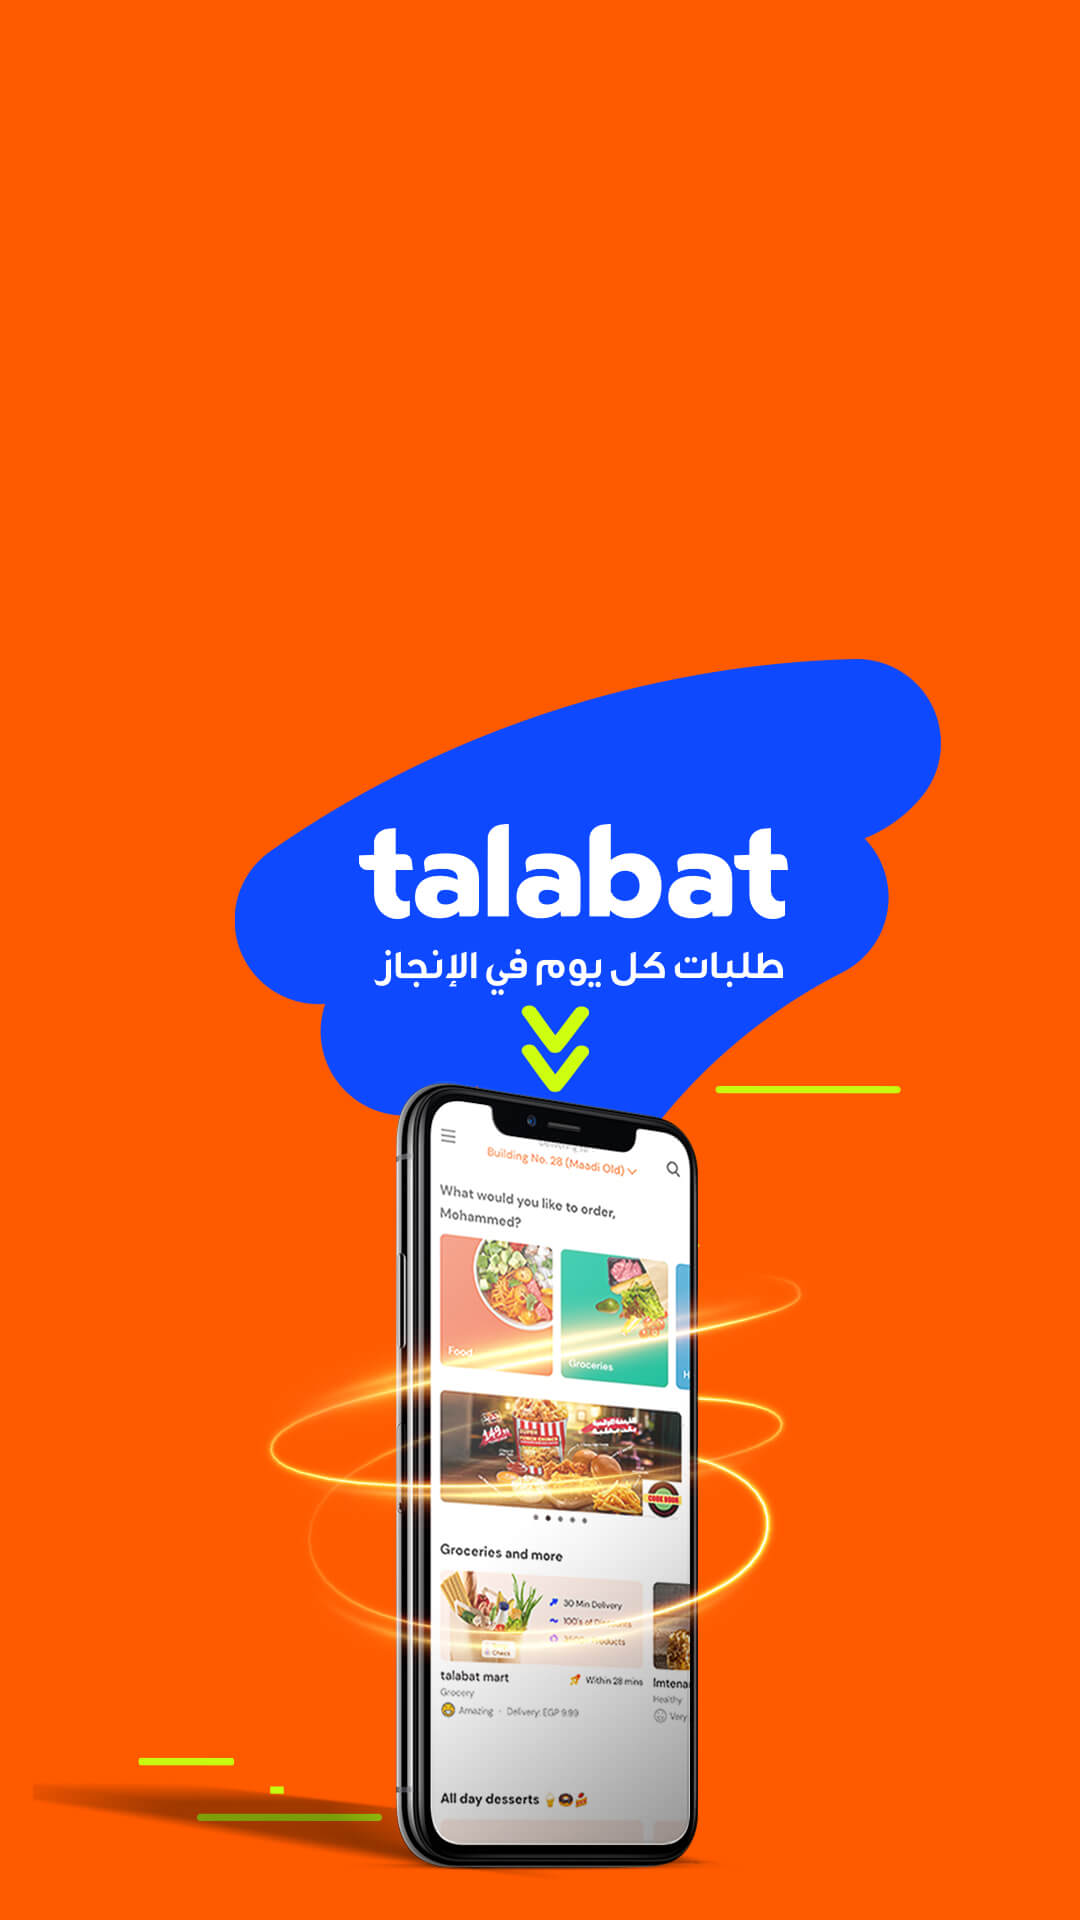 talabat-visual-icon-creations-orange-blue